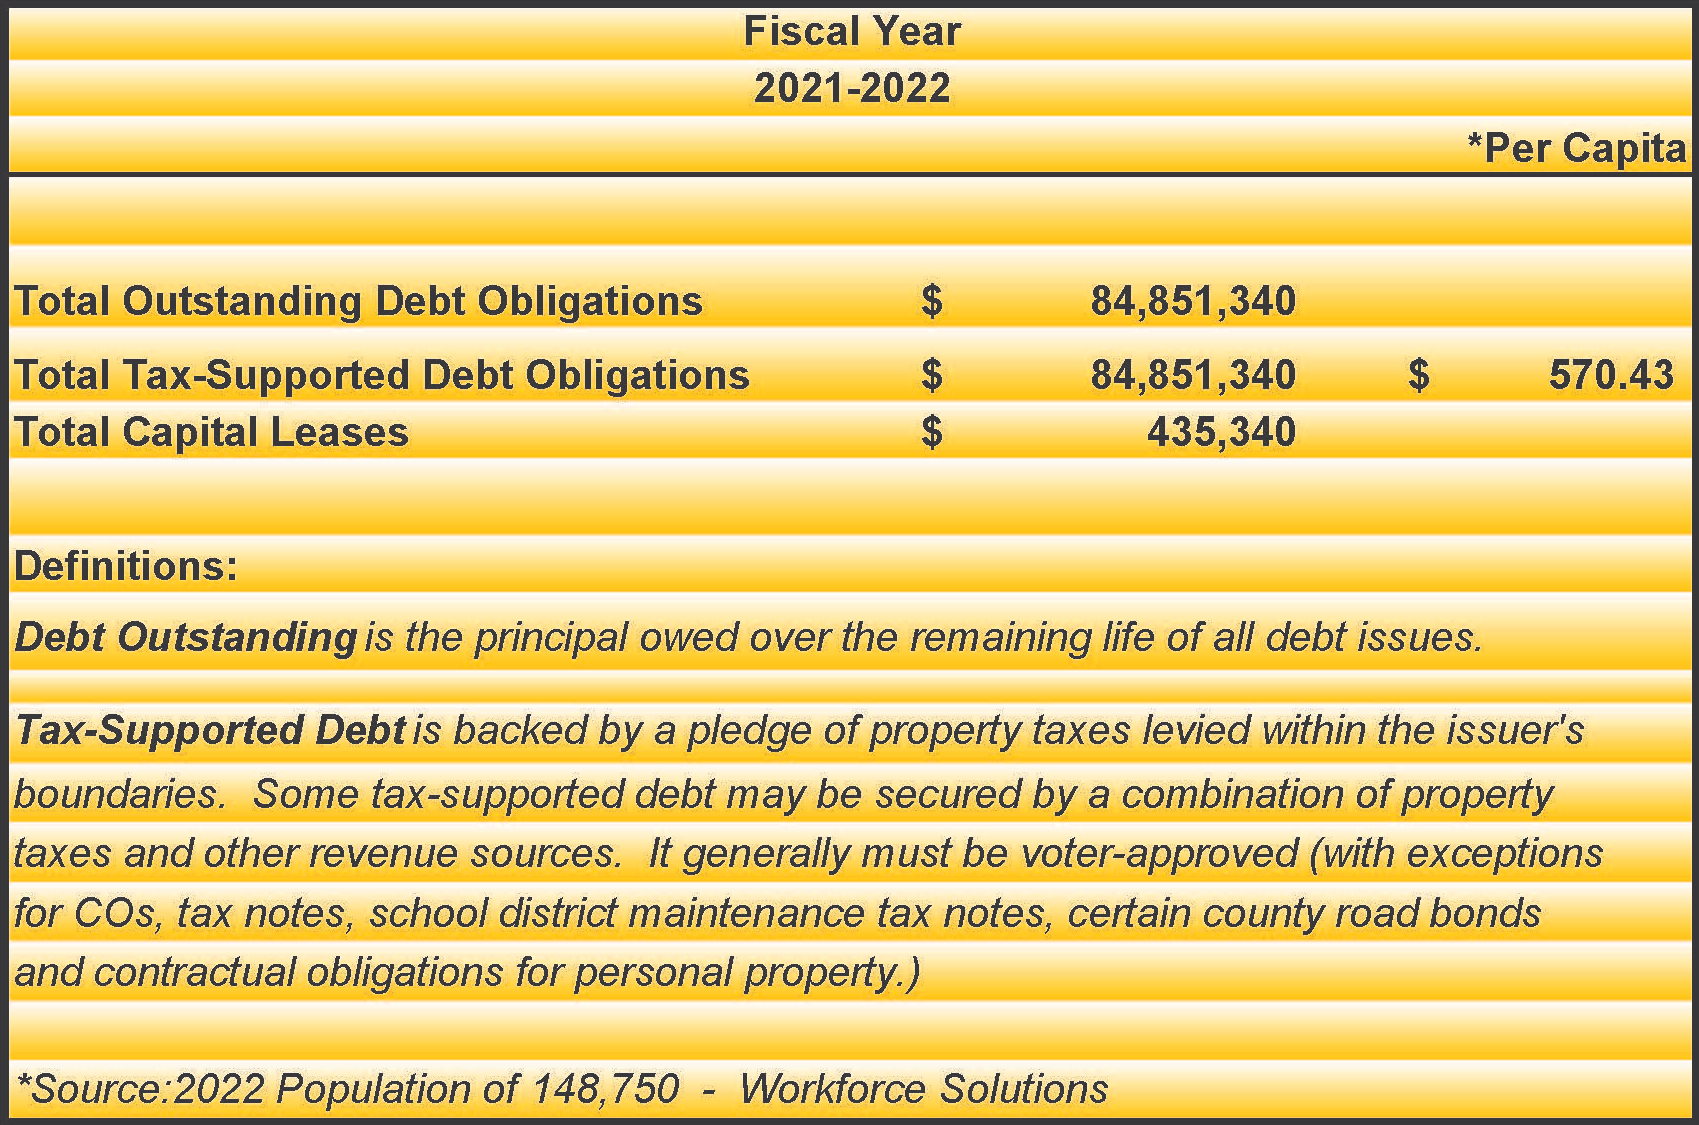 Total Outstanding Debt Obligations